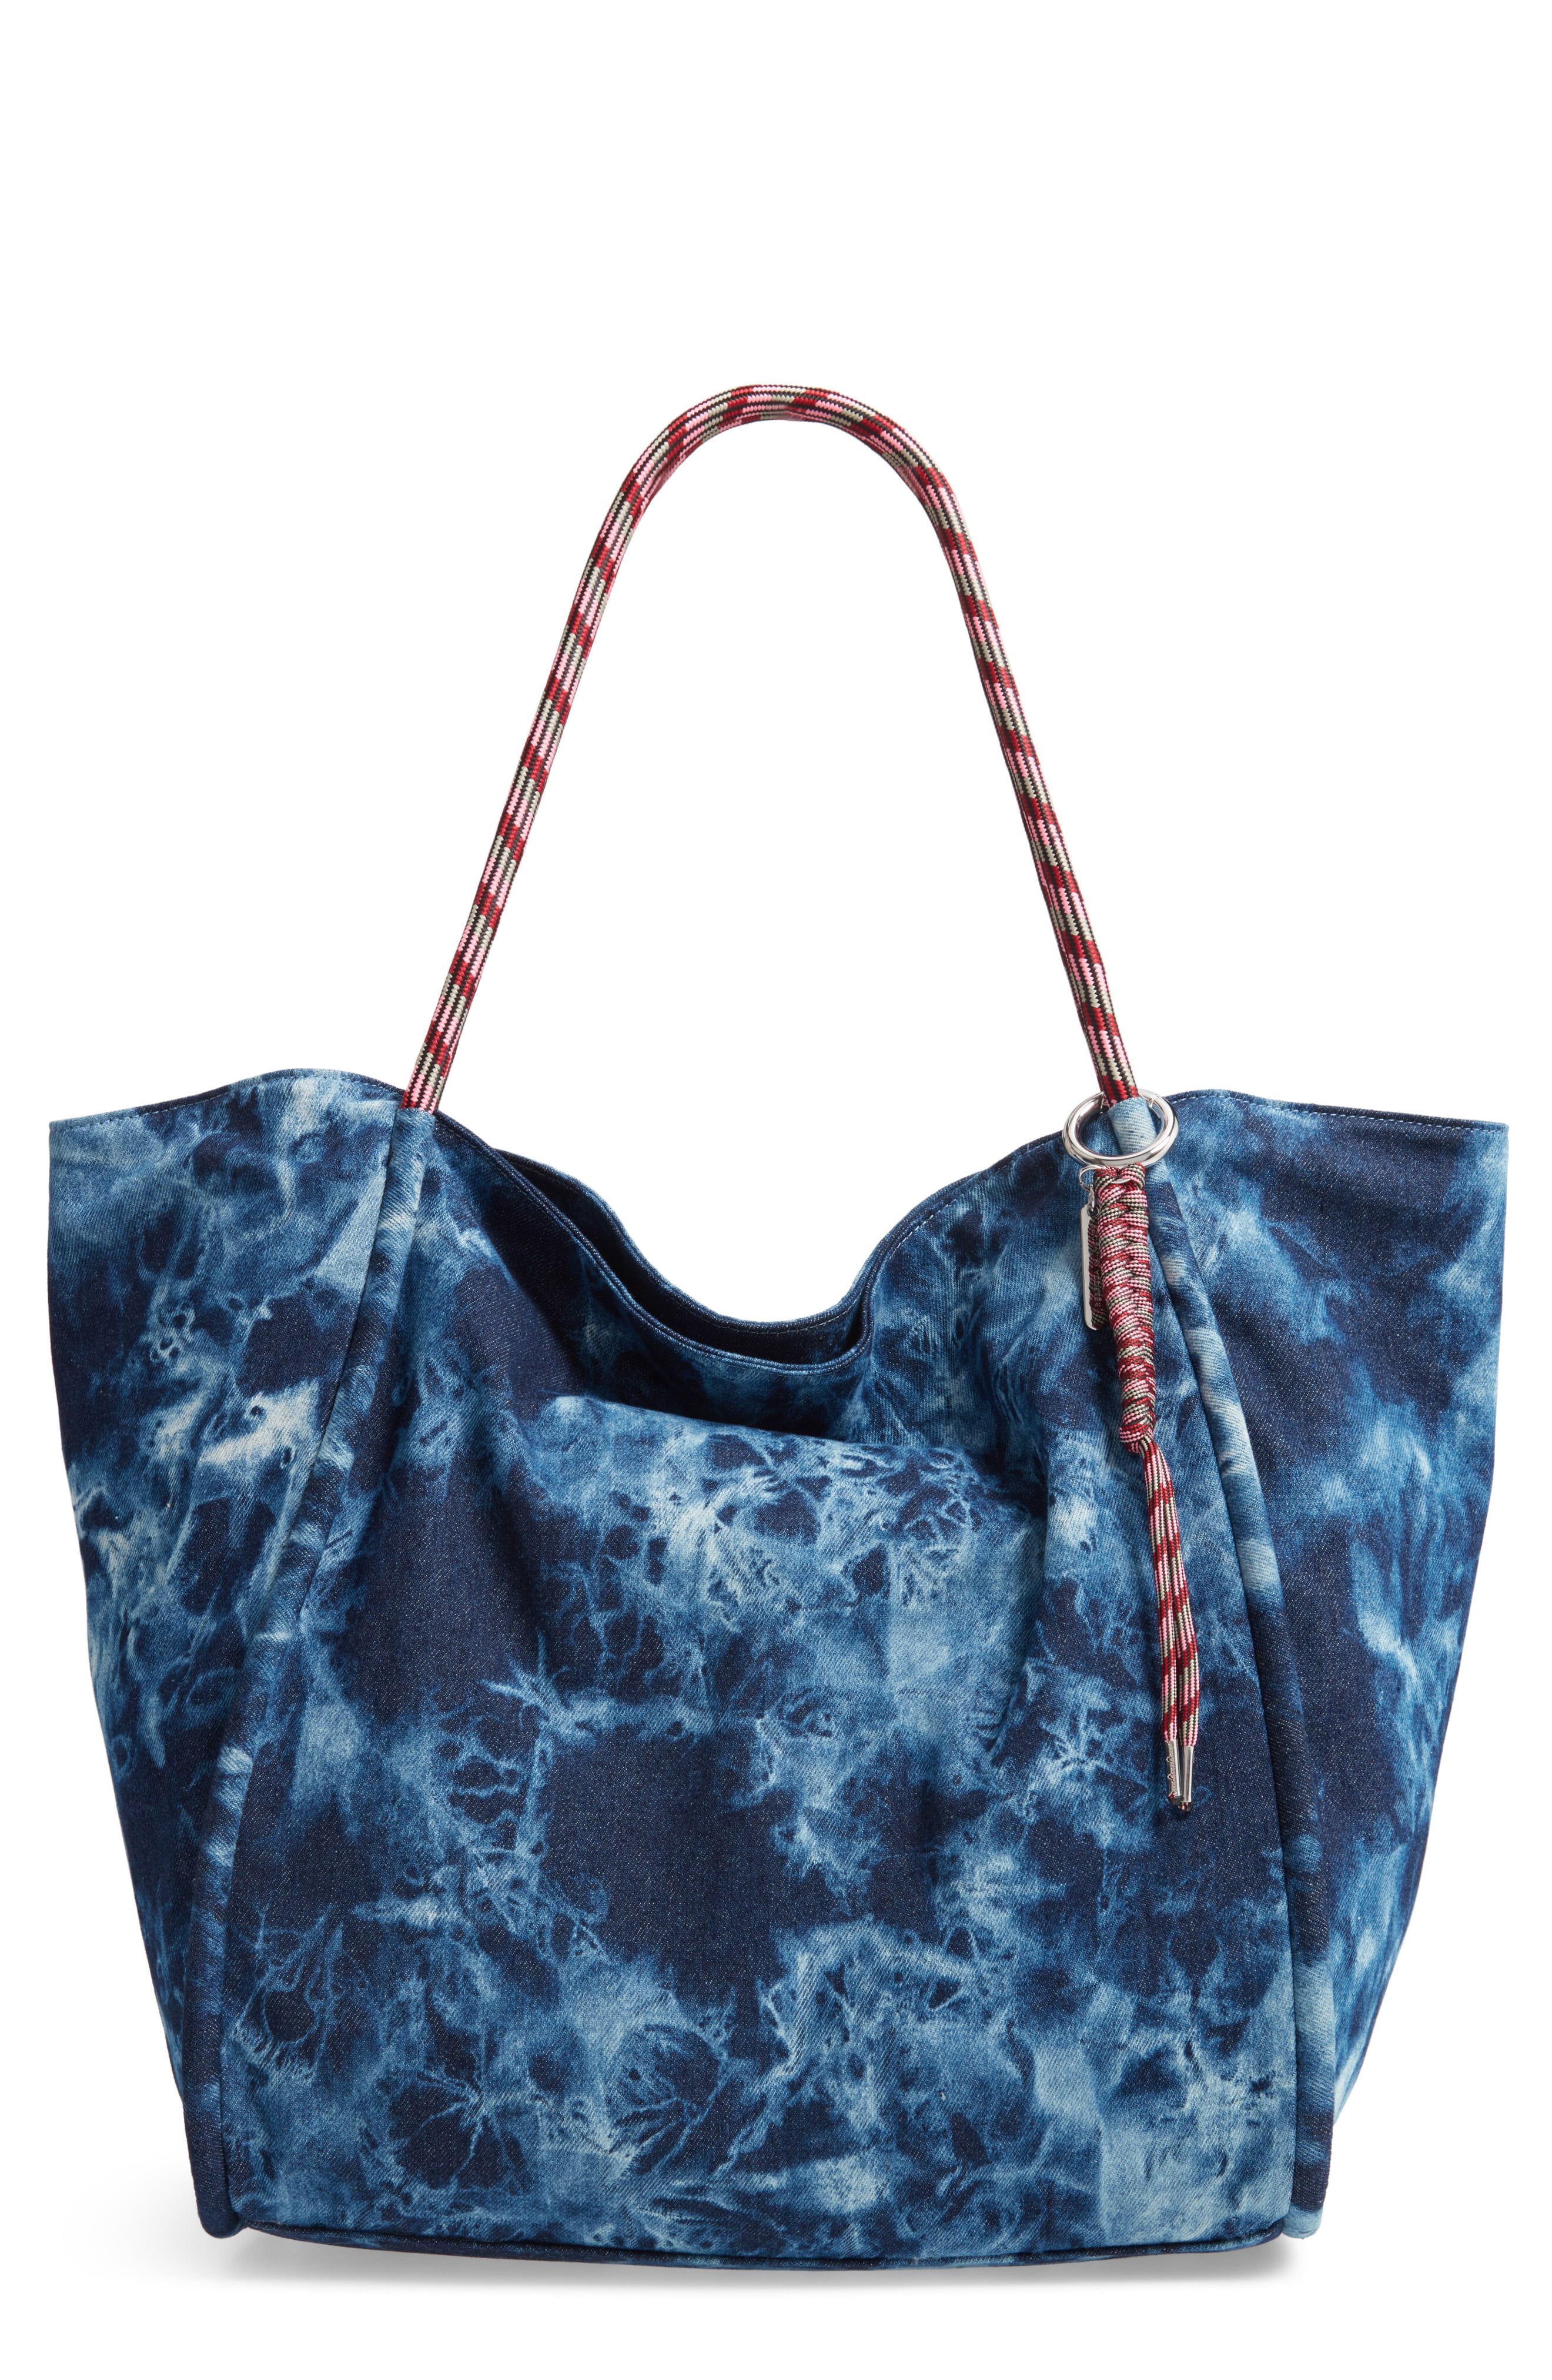 FICOO Animal Sleeping Fox Leaf Women Tote Bag Large Shoulder Bag Travel Gym Reusable Grocery Shopping Handbag 